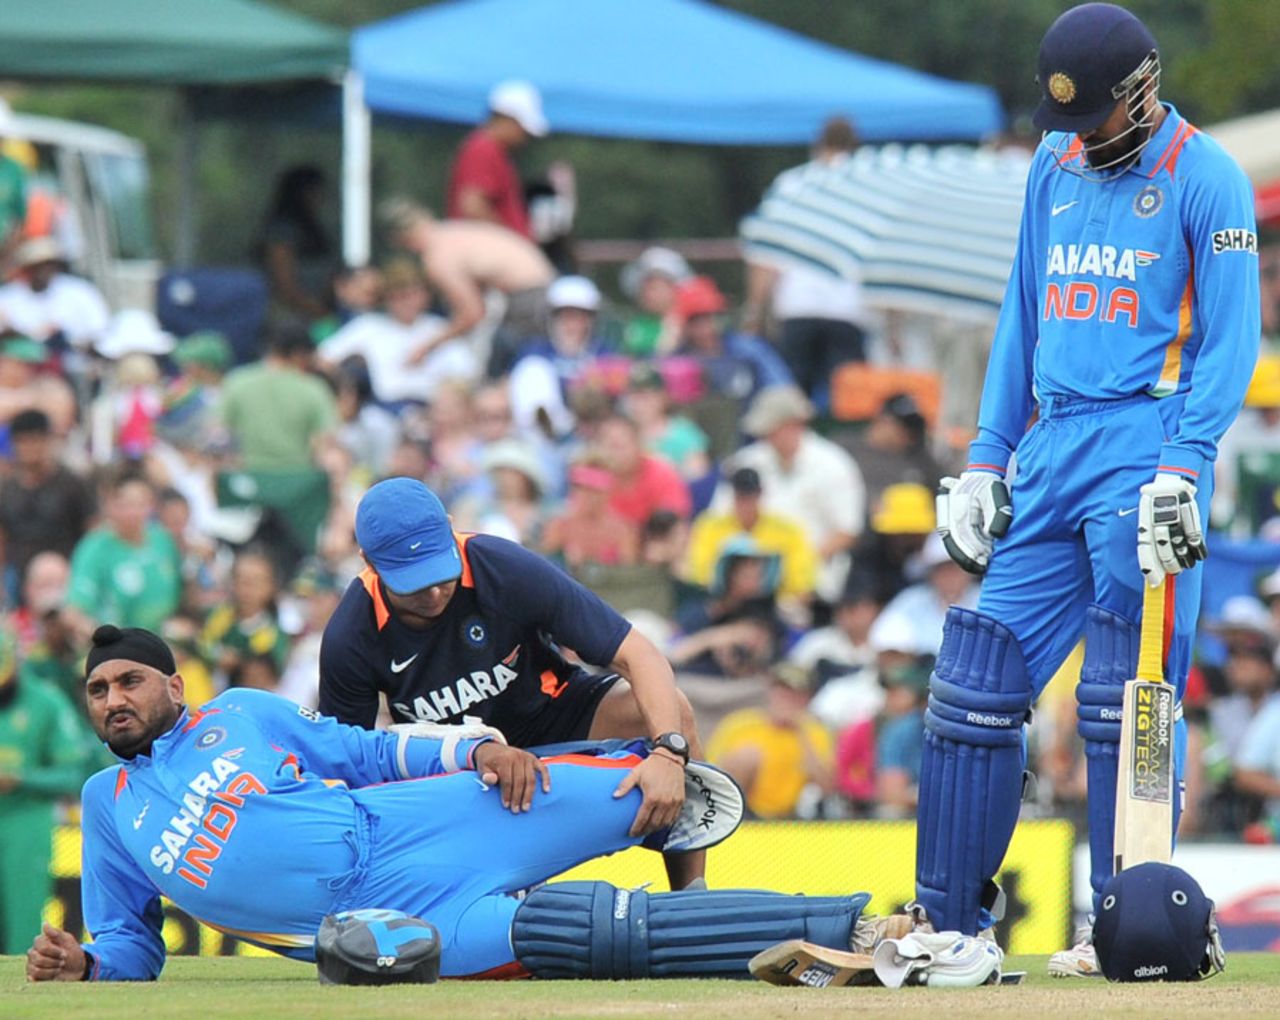 Harbhajan Singh receives treatment for a hamstring injury, South Africa v India, 5th ODI, Centurion, January 23, 2011